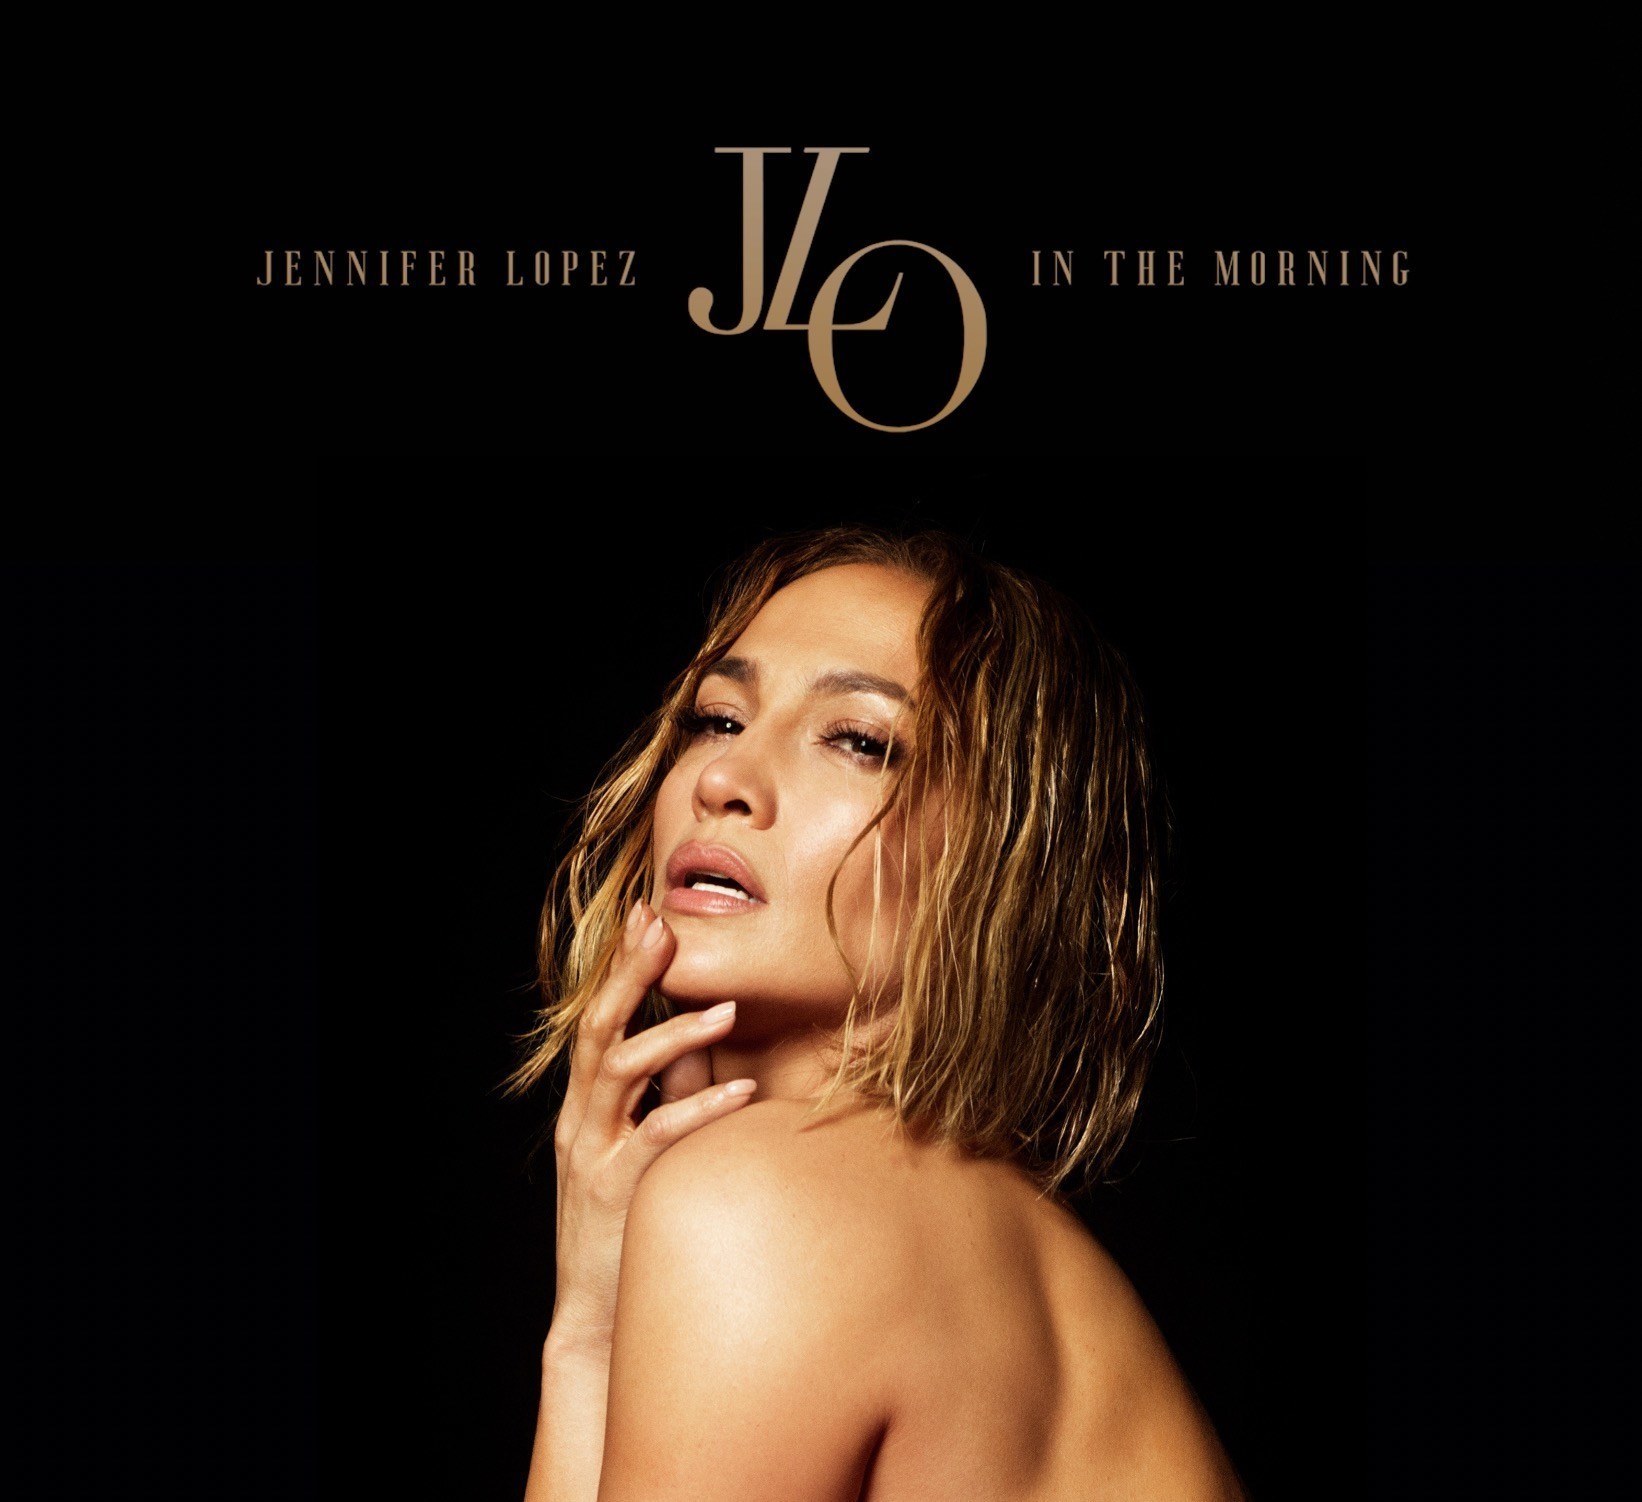 Jennifer Lopez Releases New Single, "In The Morning" Entertainment Rocks